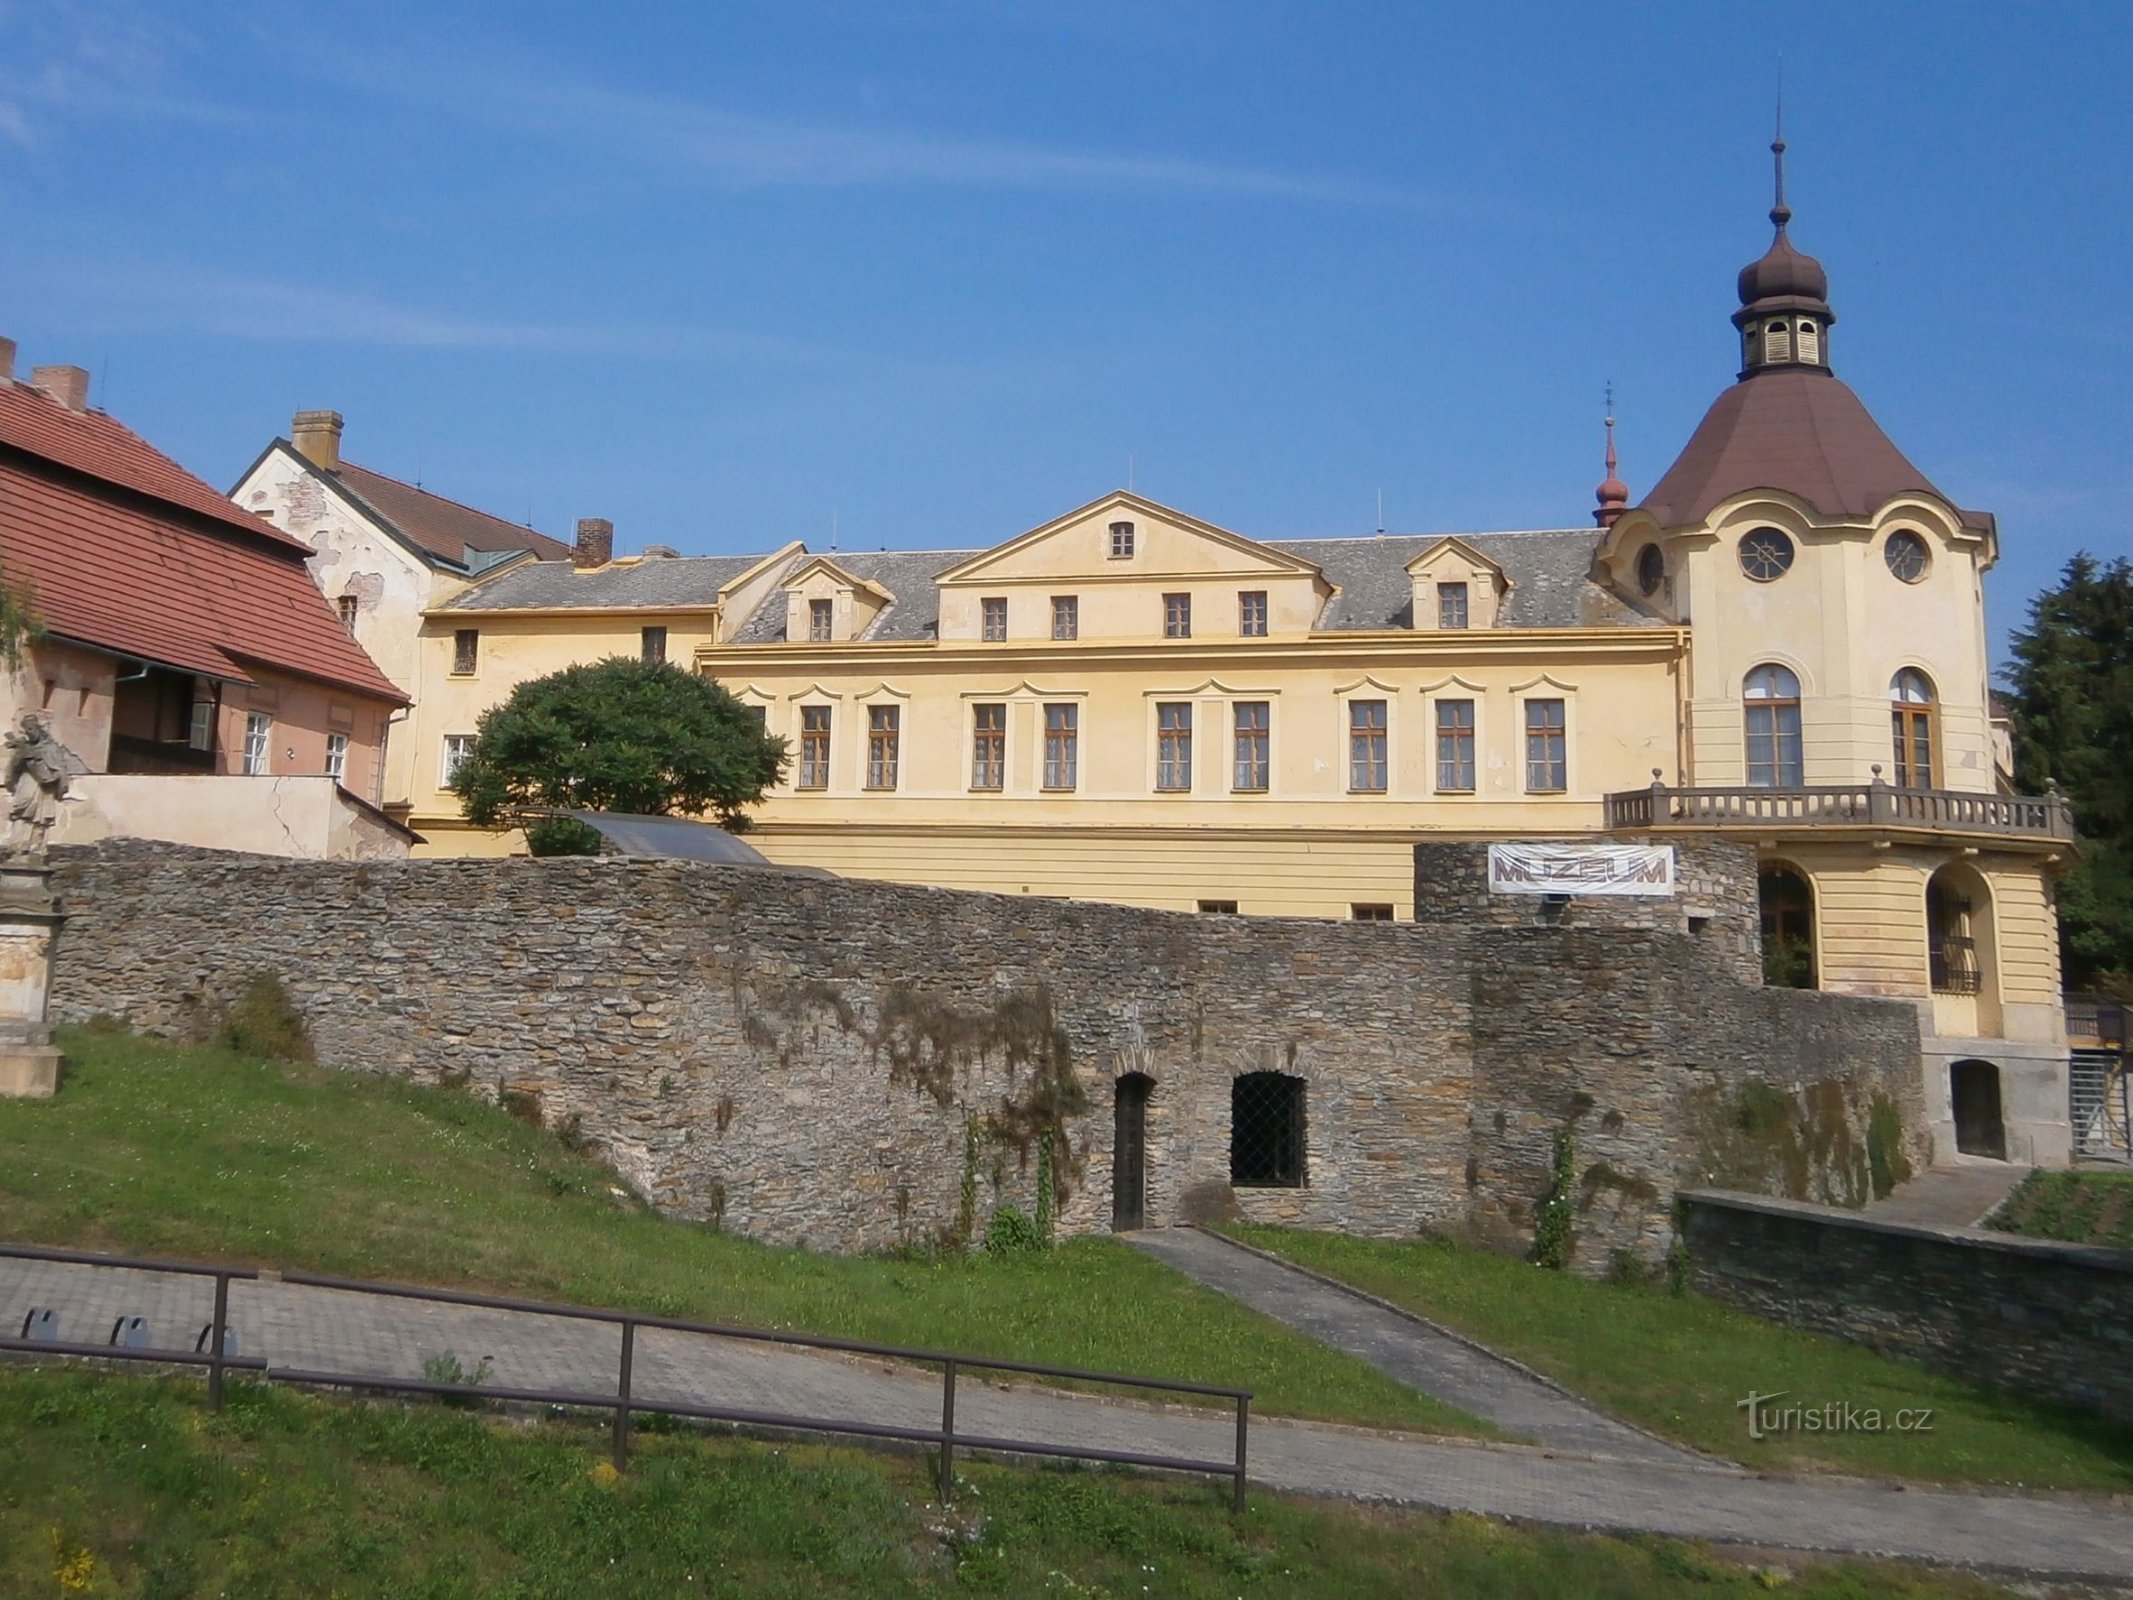 La dependance della locanda Steidler trasformata in monastero (Česká Skalice, 5.7.2017 luglio XNUMX)